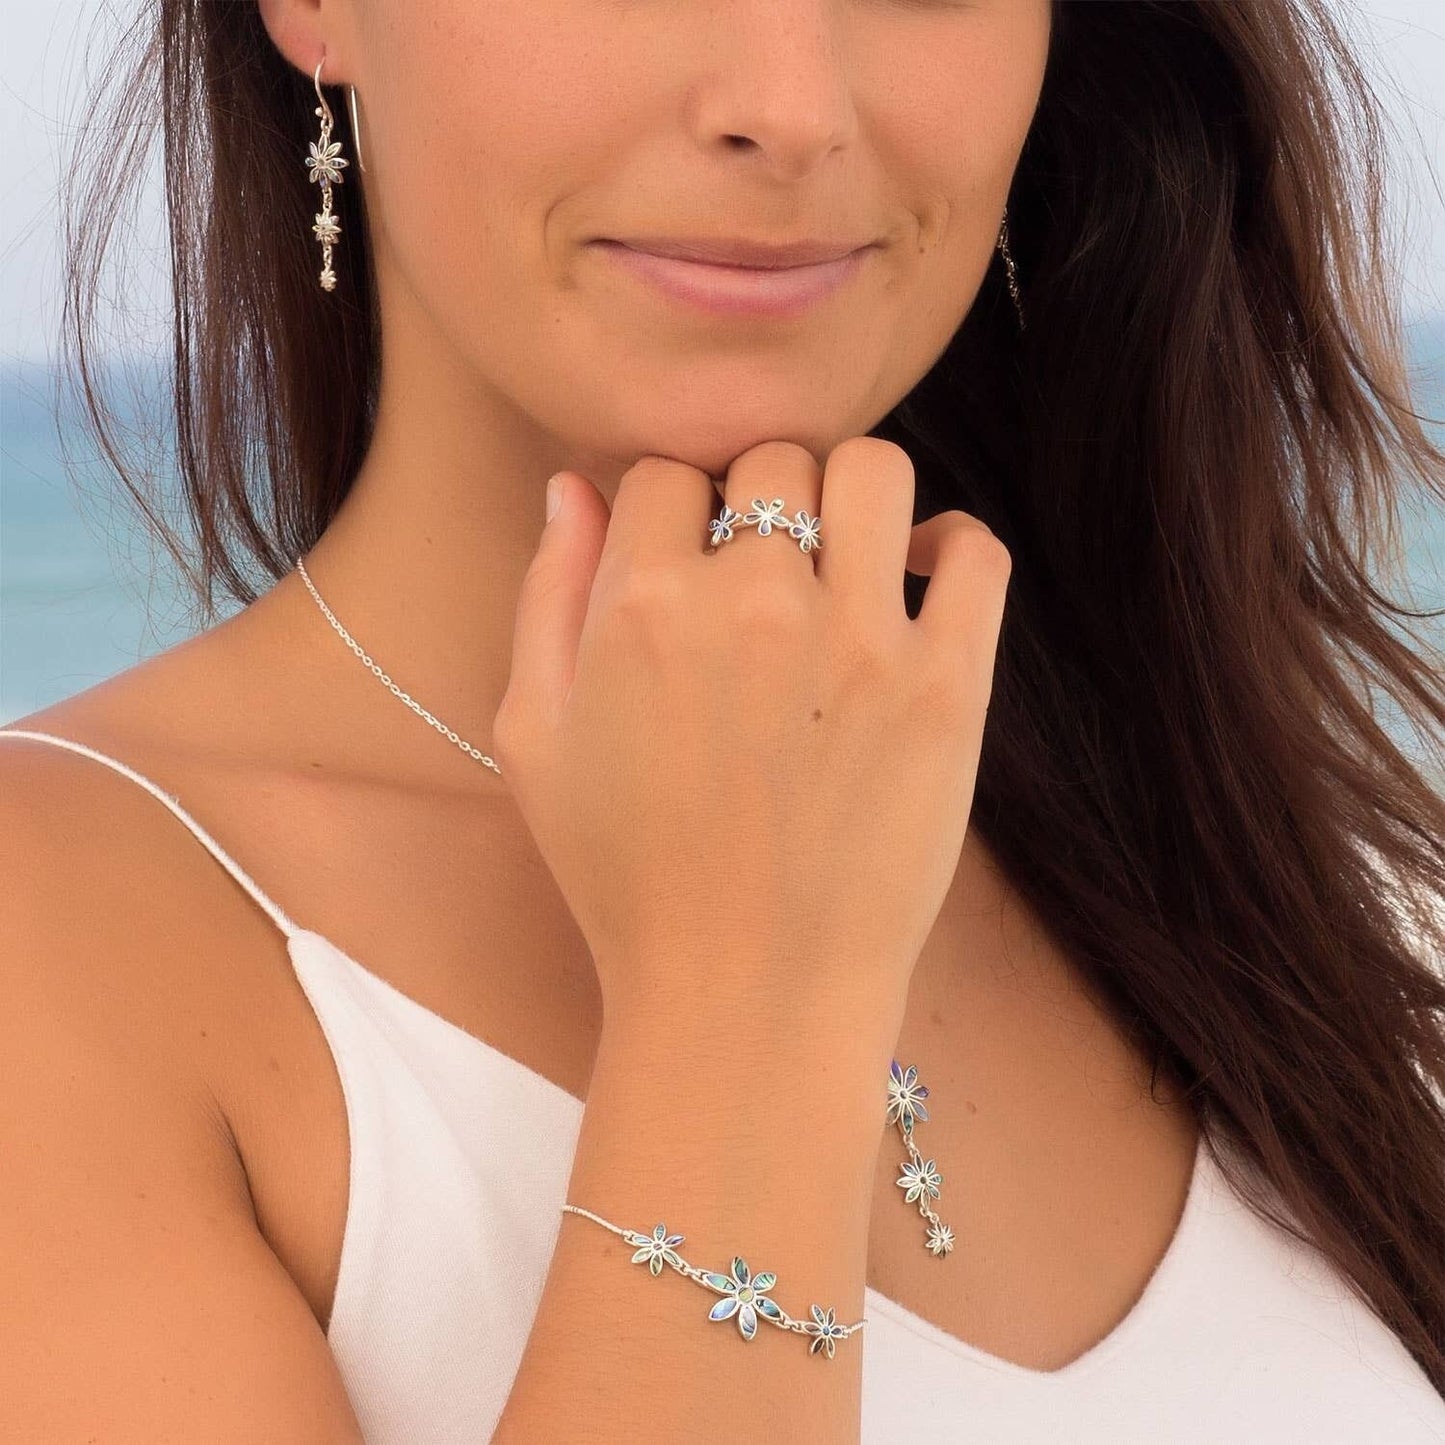 Aden Bijoux Mother of Pearl Jewelry - Adjustable Flower Bracelet in Silver. Best Selling French Brand